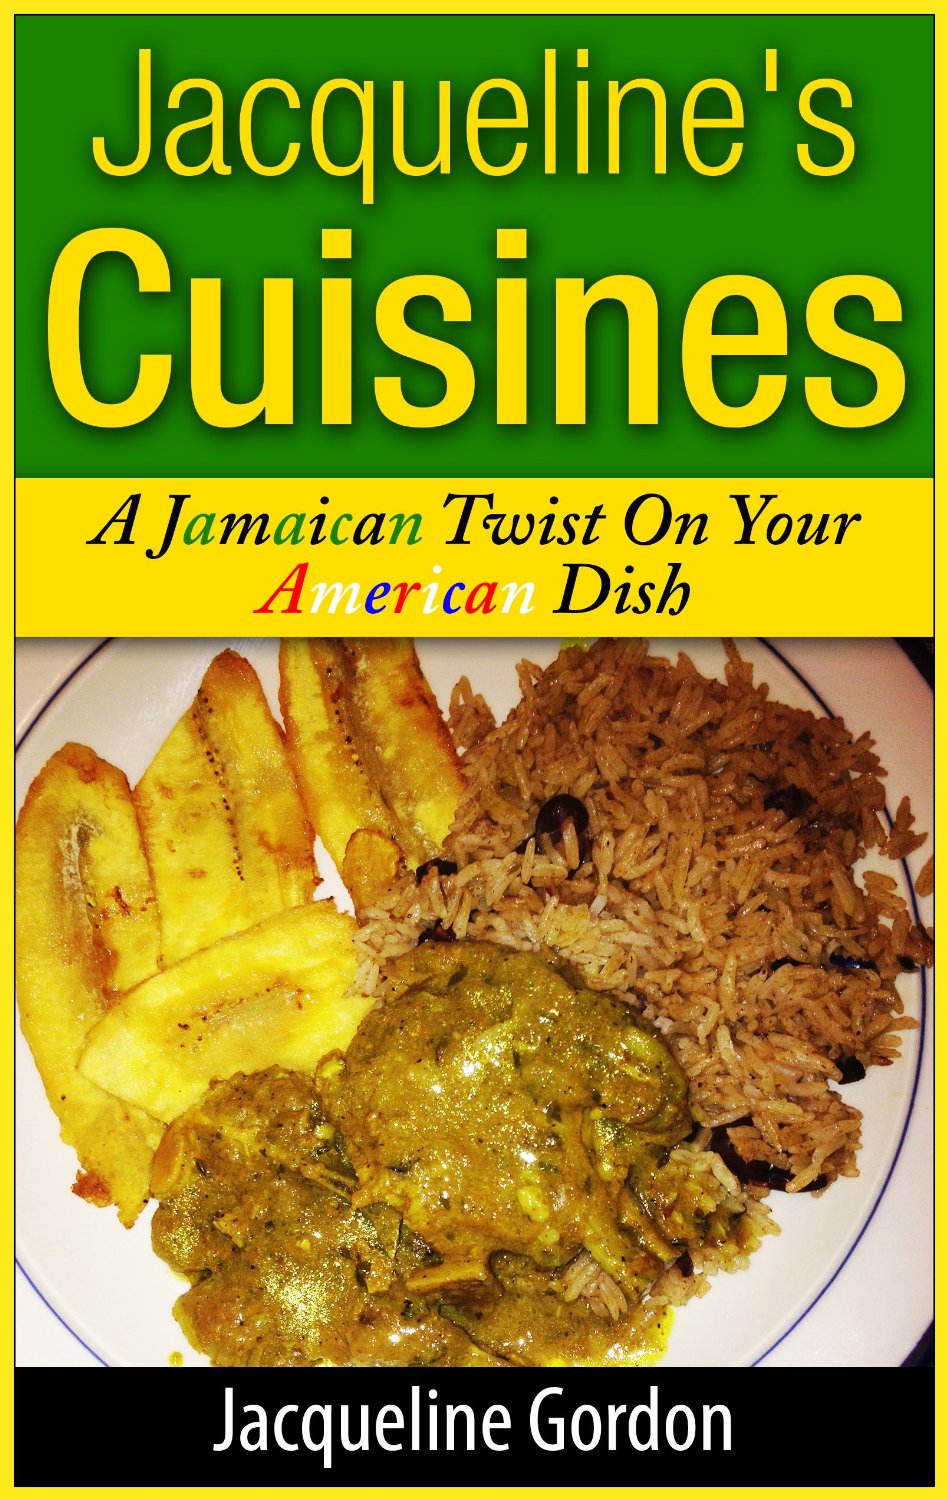 Jacqueline’s Cuisines: A Jamaican Twist On Your American Dish by Jacqueline Gordon